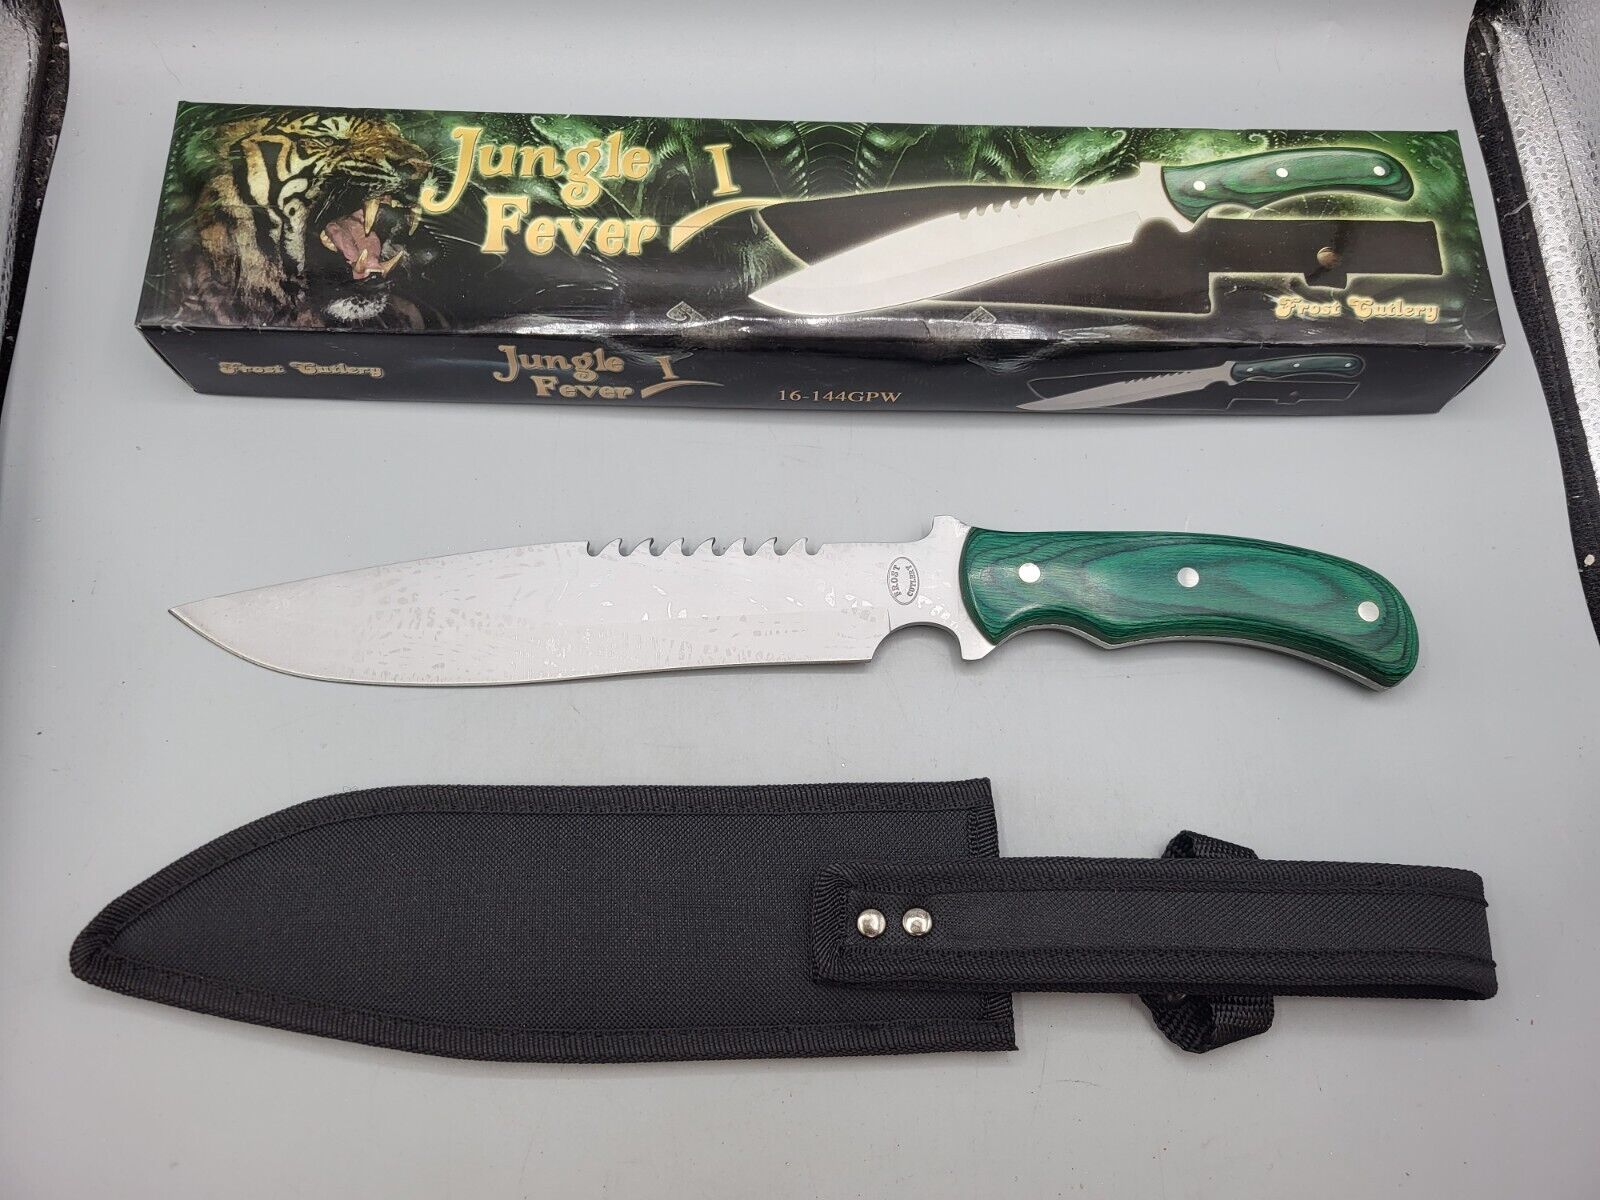 Frost Cutlery Jungle Fever I 16-144GPW Steel Blade Green Pakkawood Handle 15\